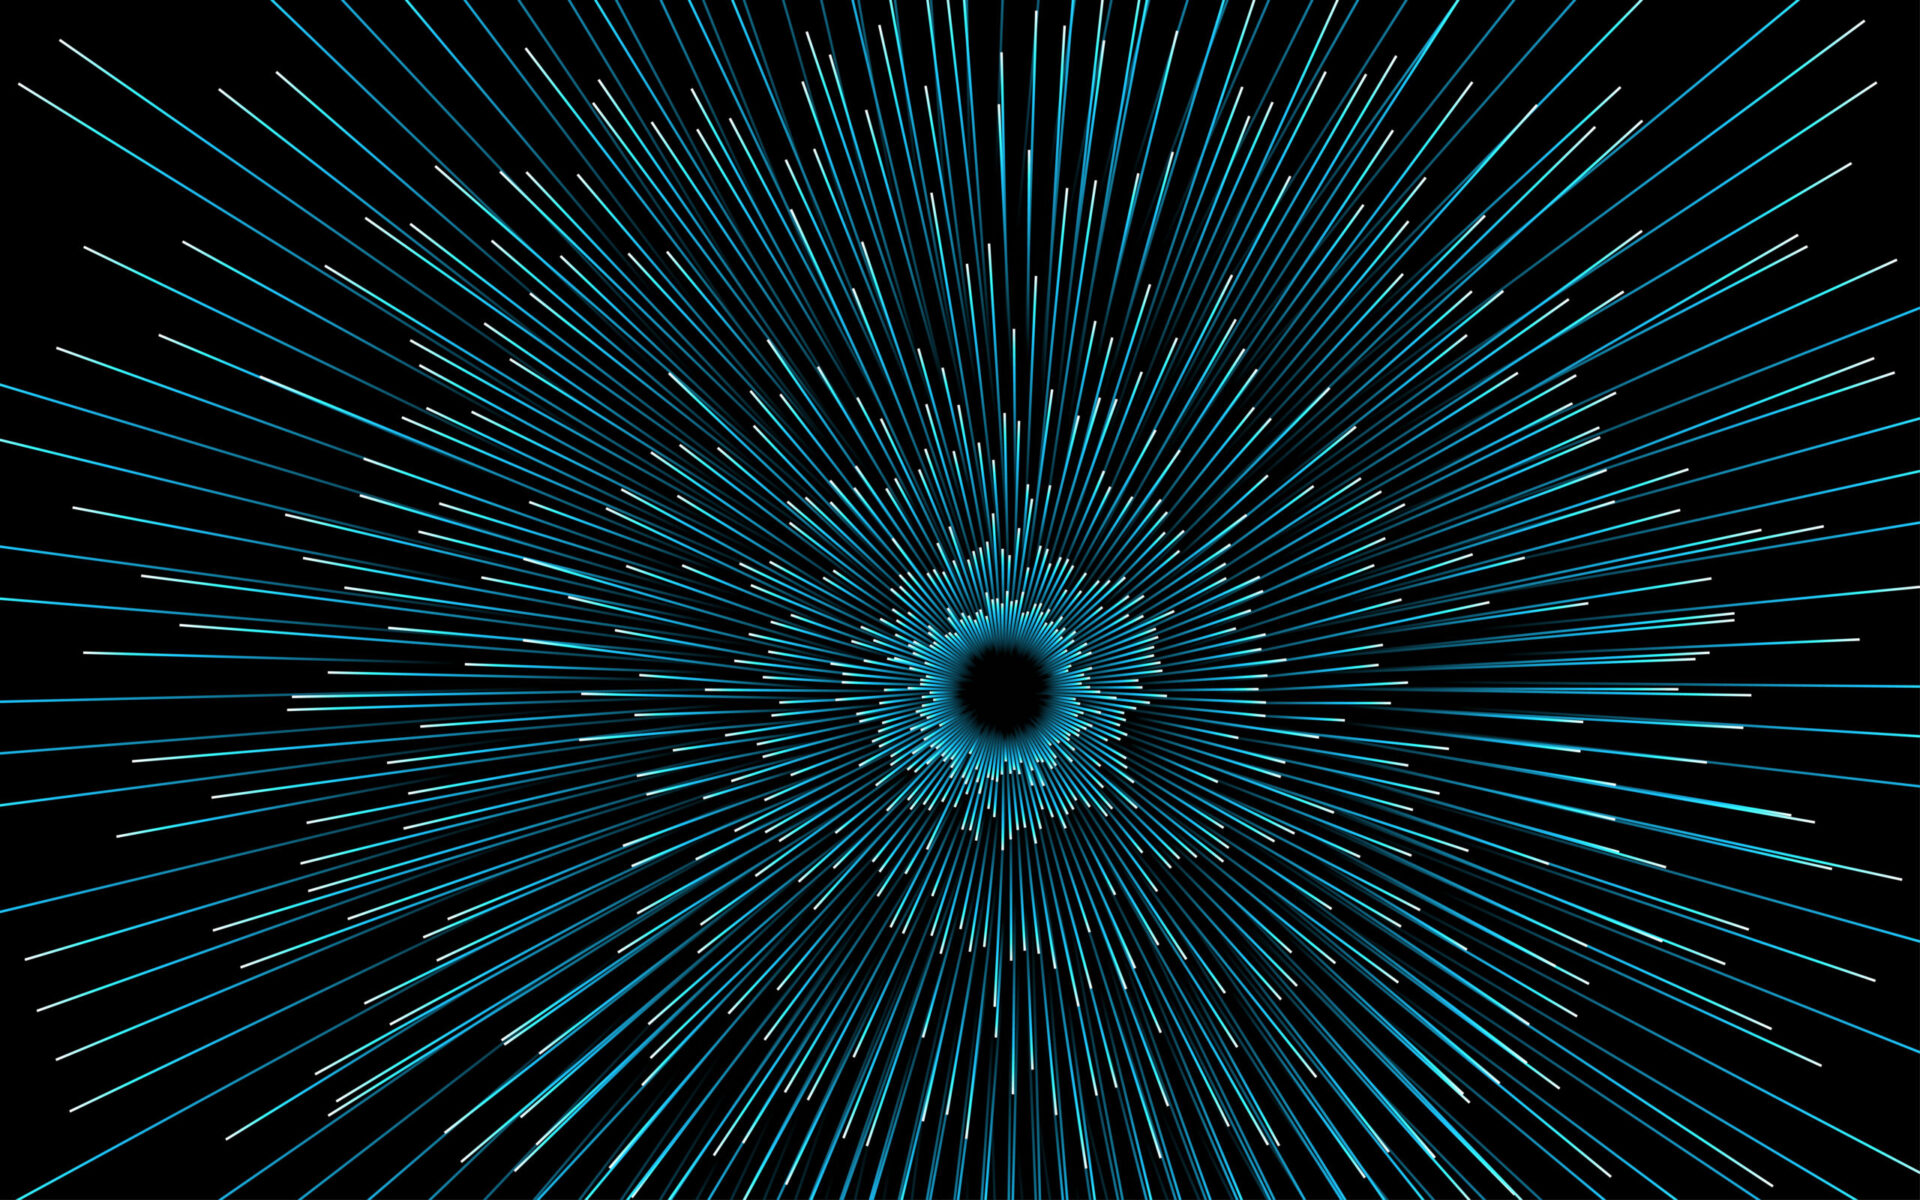 Abstract circular geometric background. Starburst dynamic centri